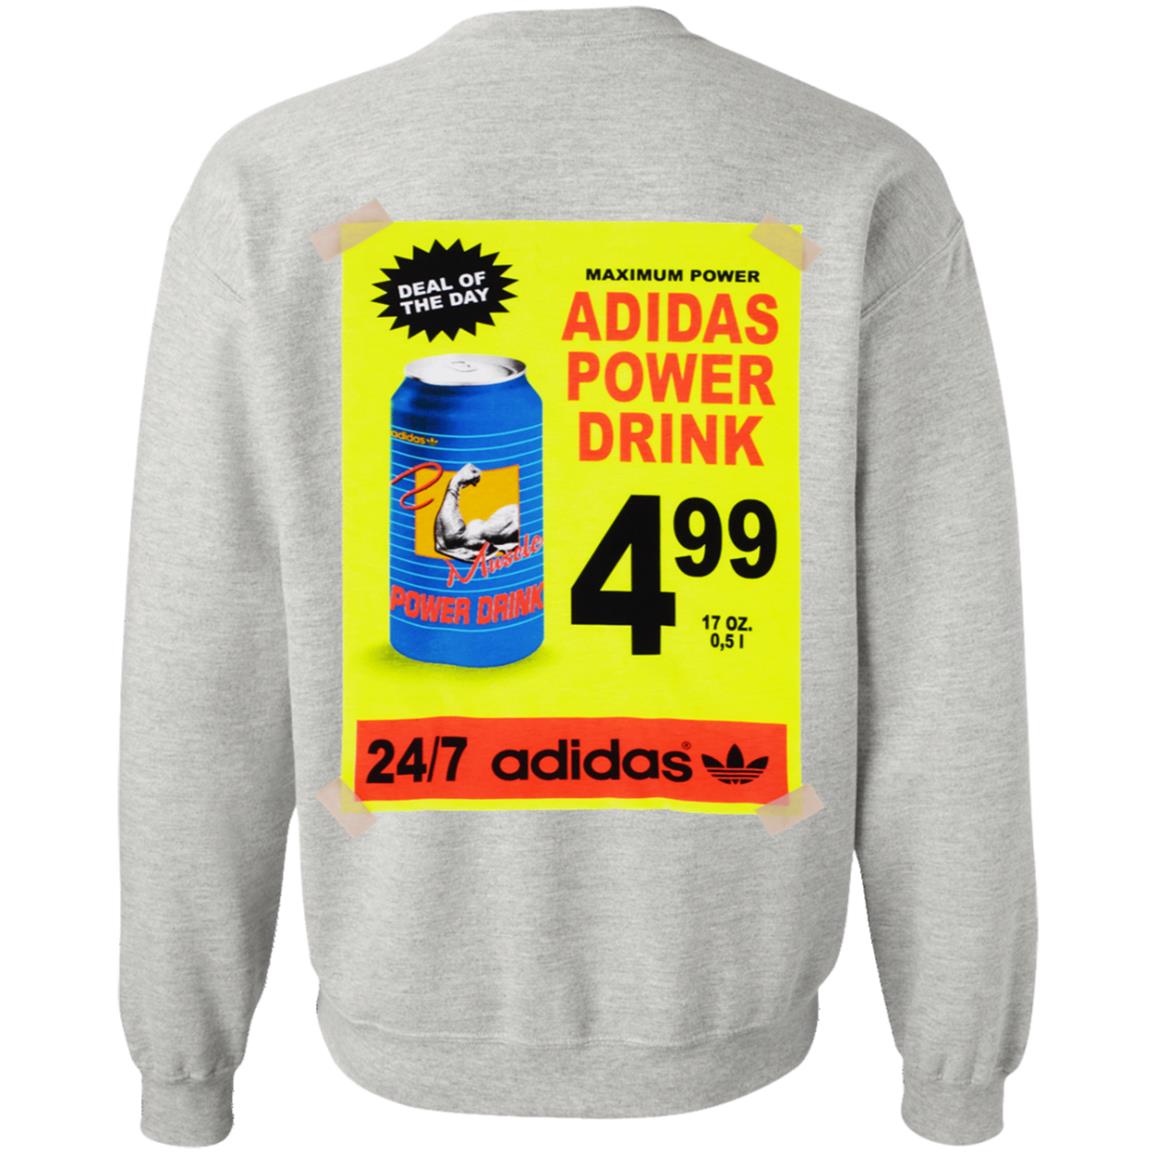 adidas power drink t shirt